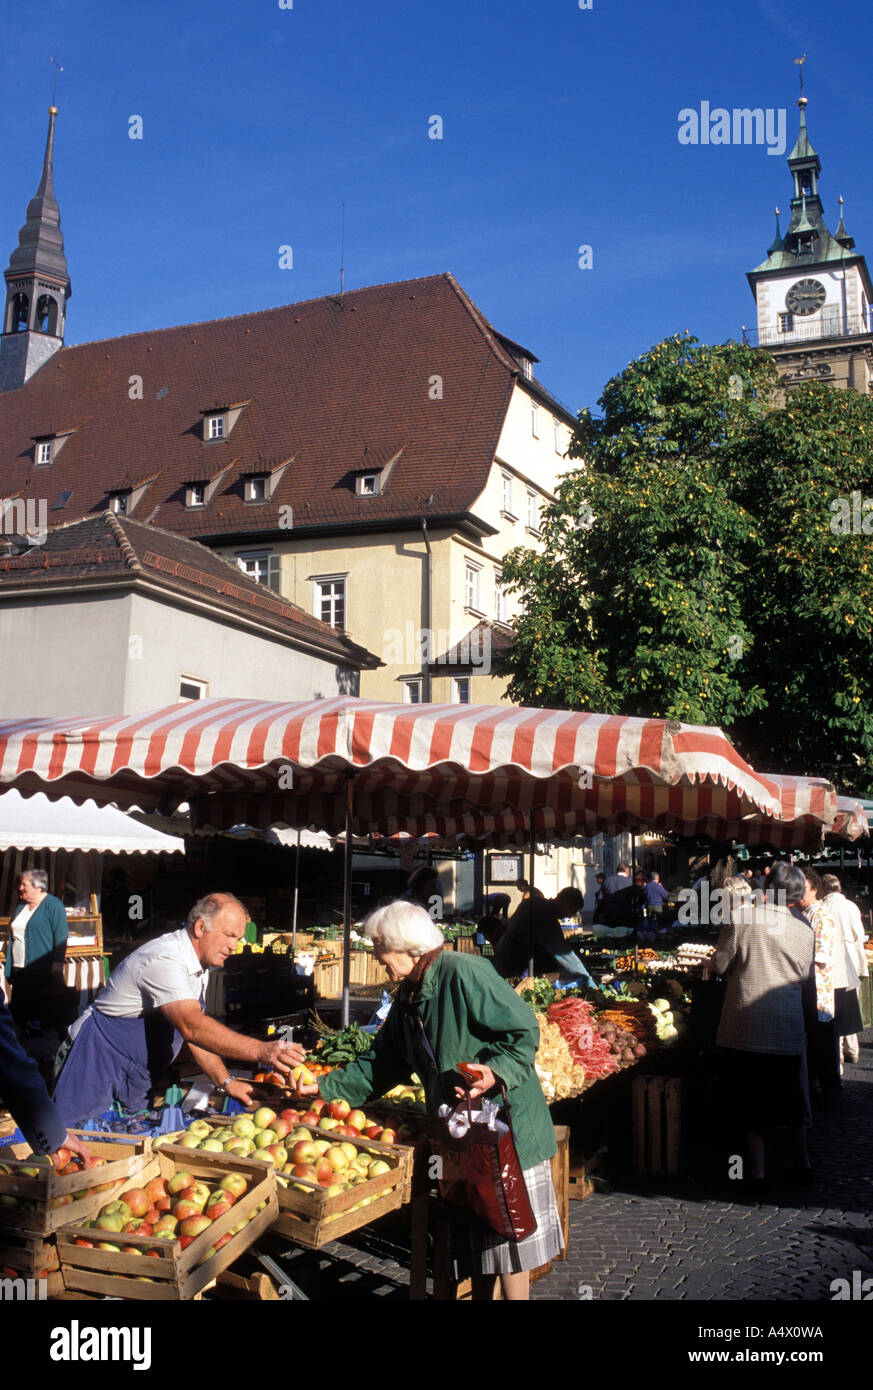 Le bancarelle del mercato al mercato settimanale in piazza mercato Bad Cannstatt Stuttgart Baden Württemberg Germania Foto Stock